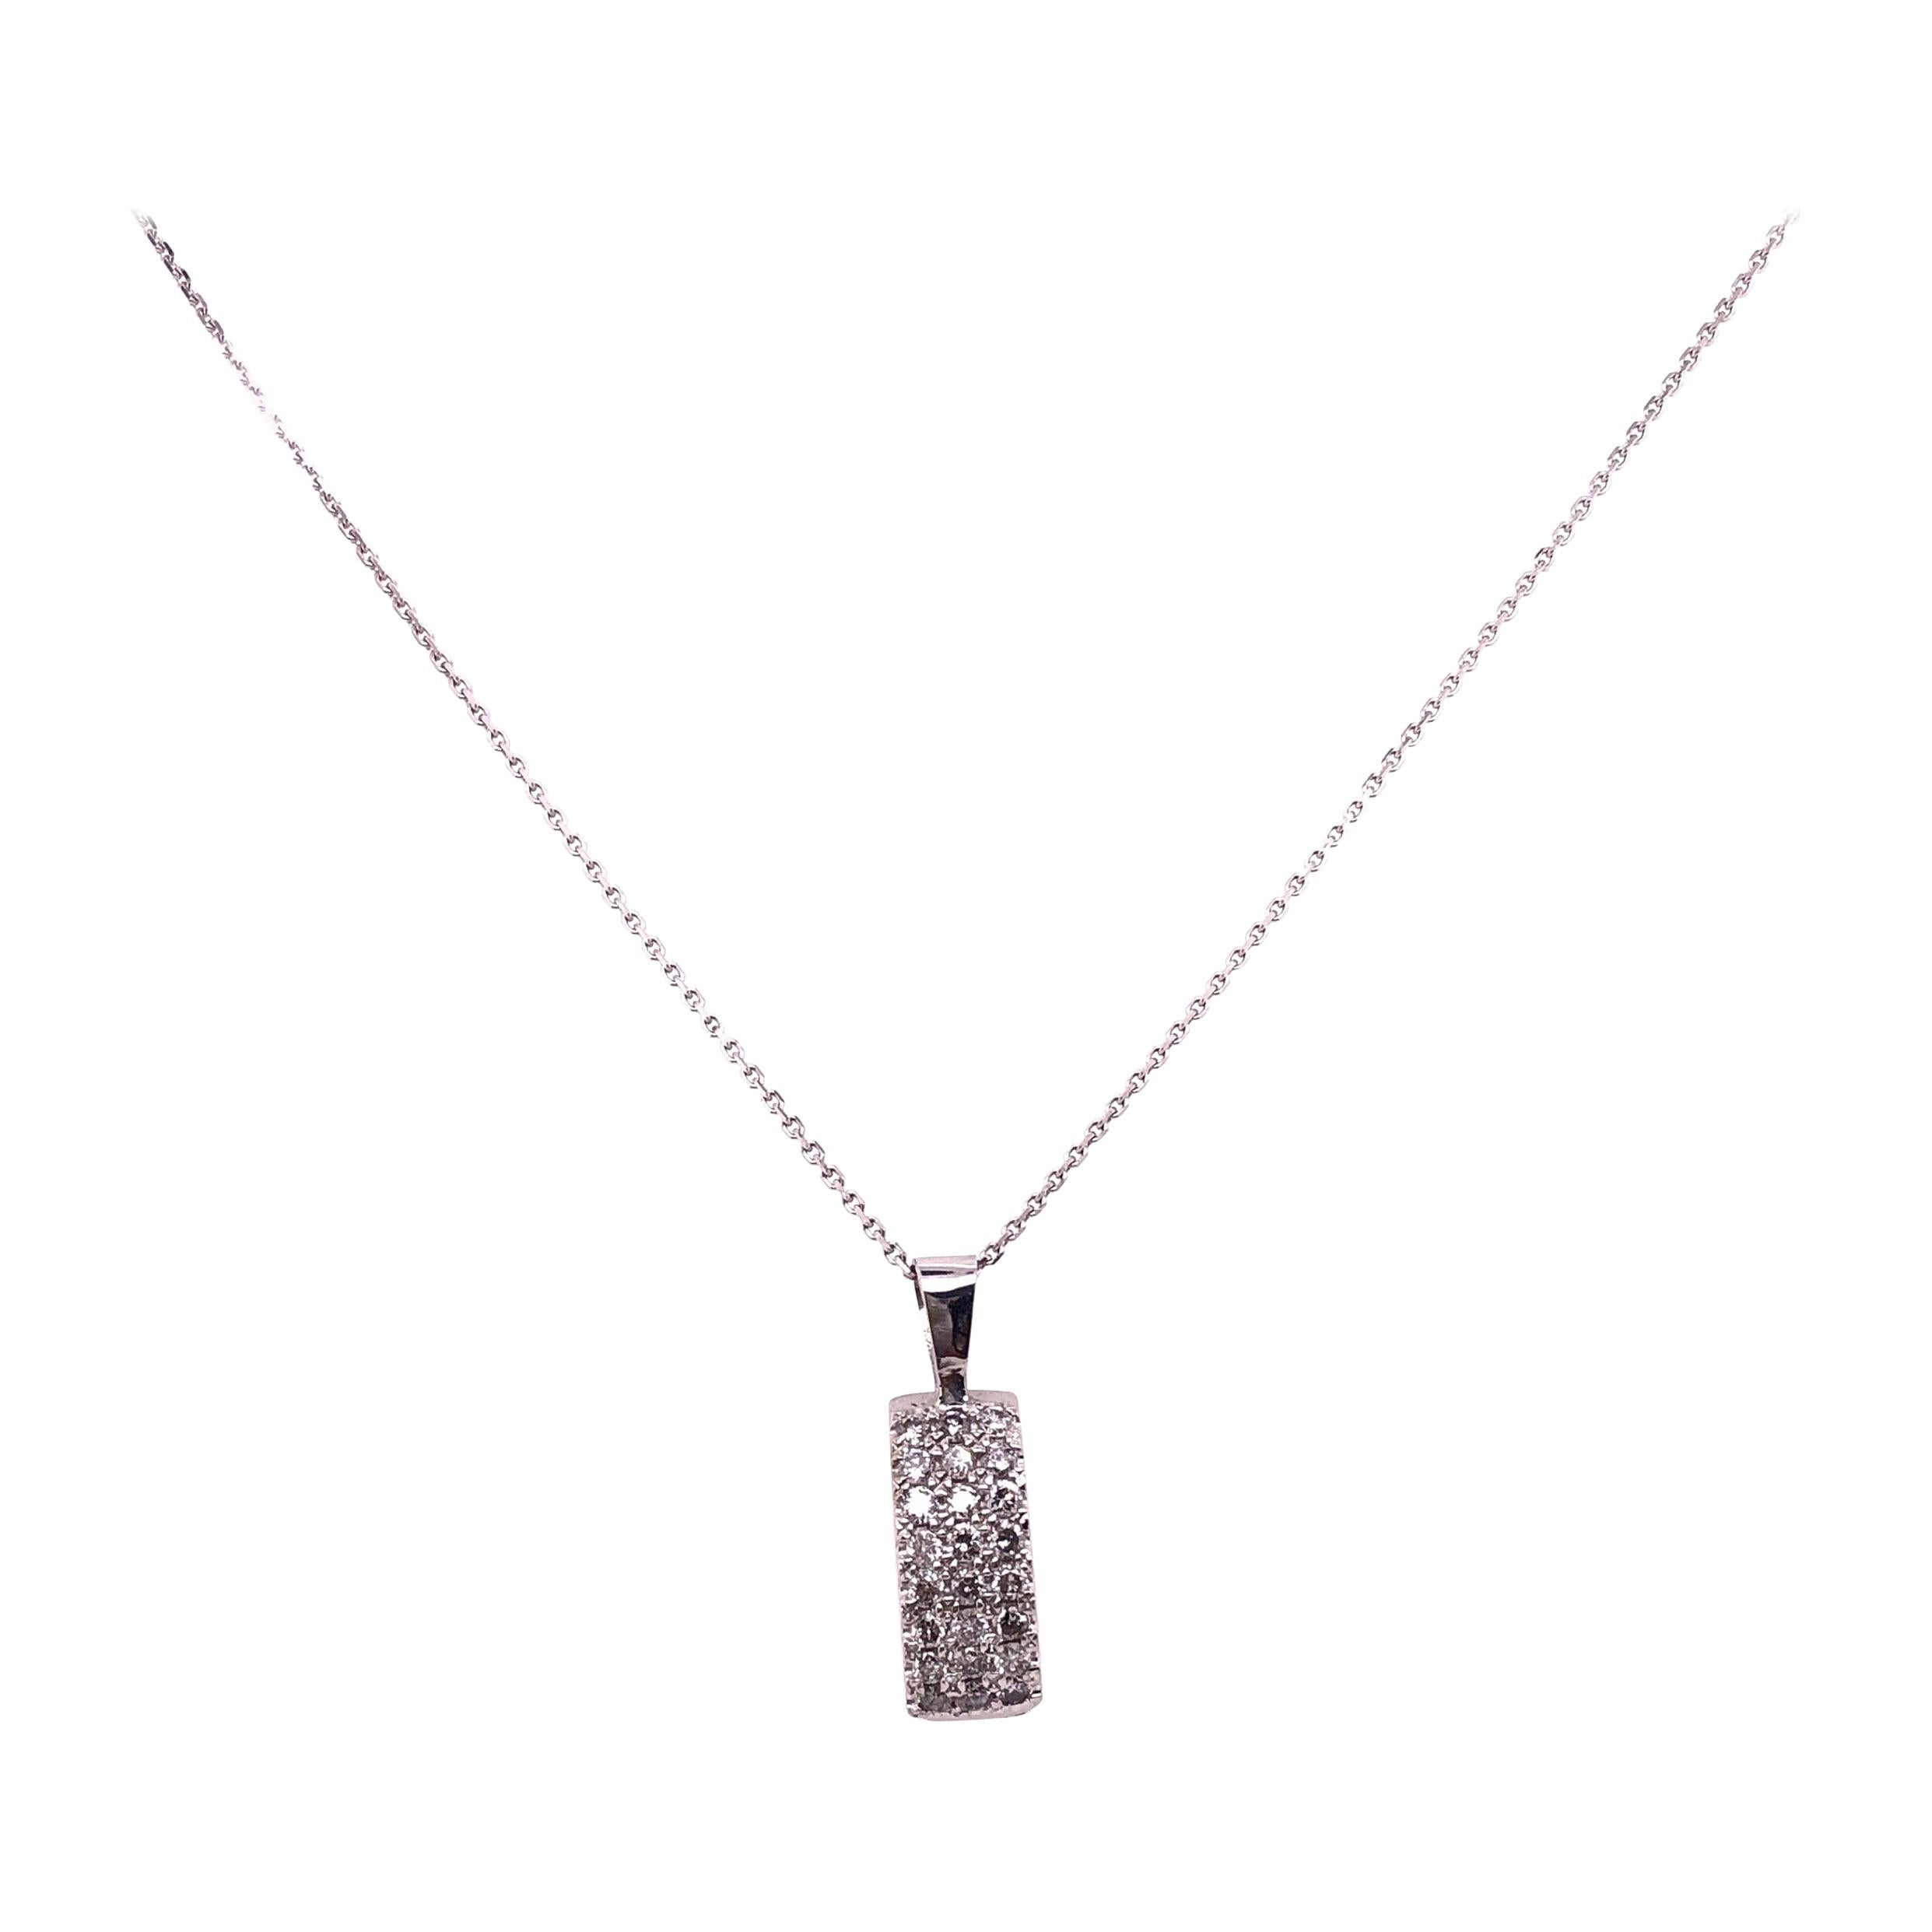 14 Karat White Gold Necklace with Pendant .80 Carat Diamond For Sale